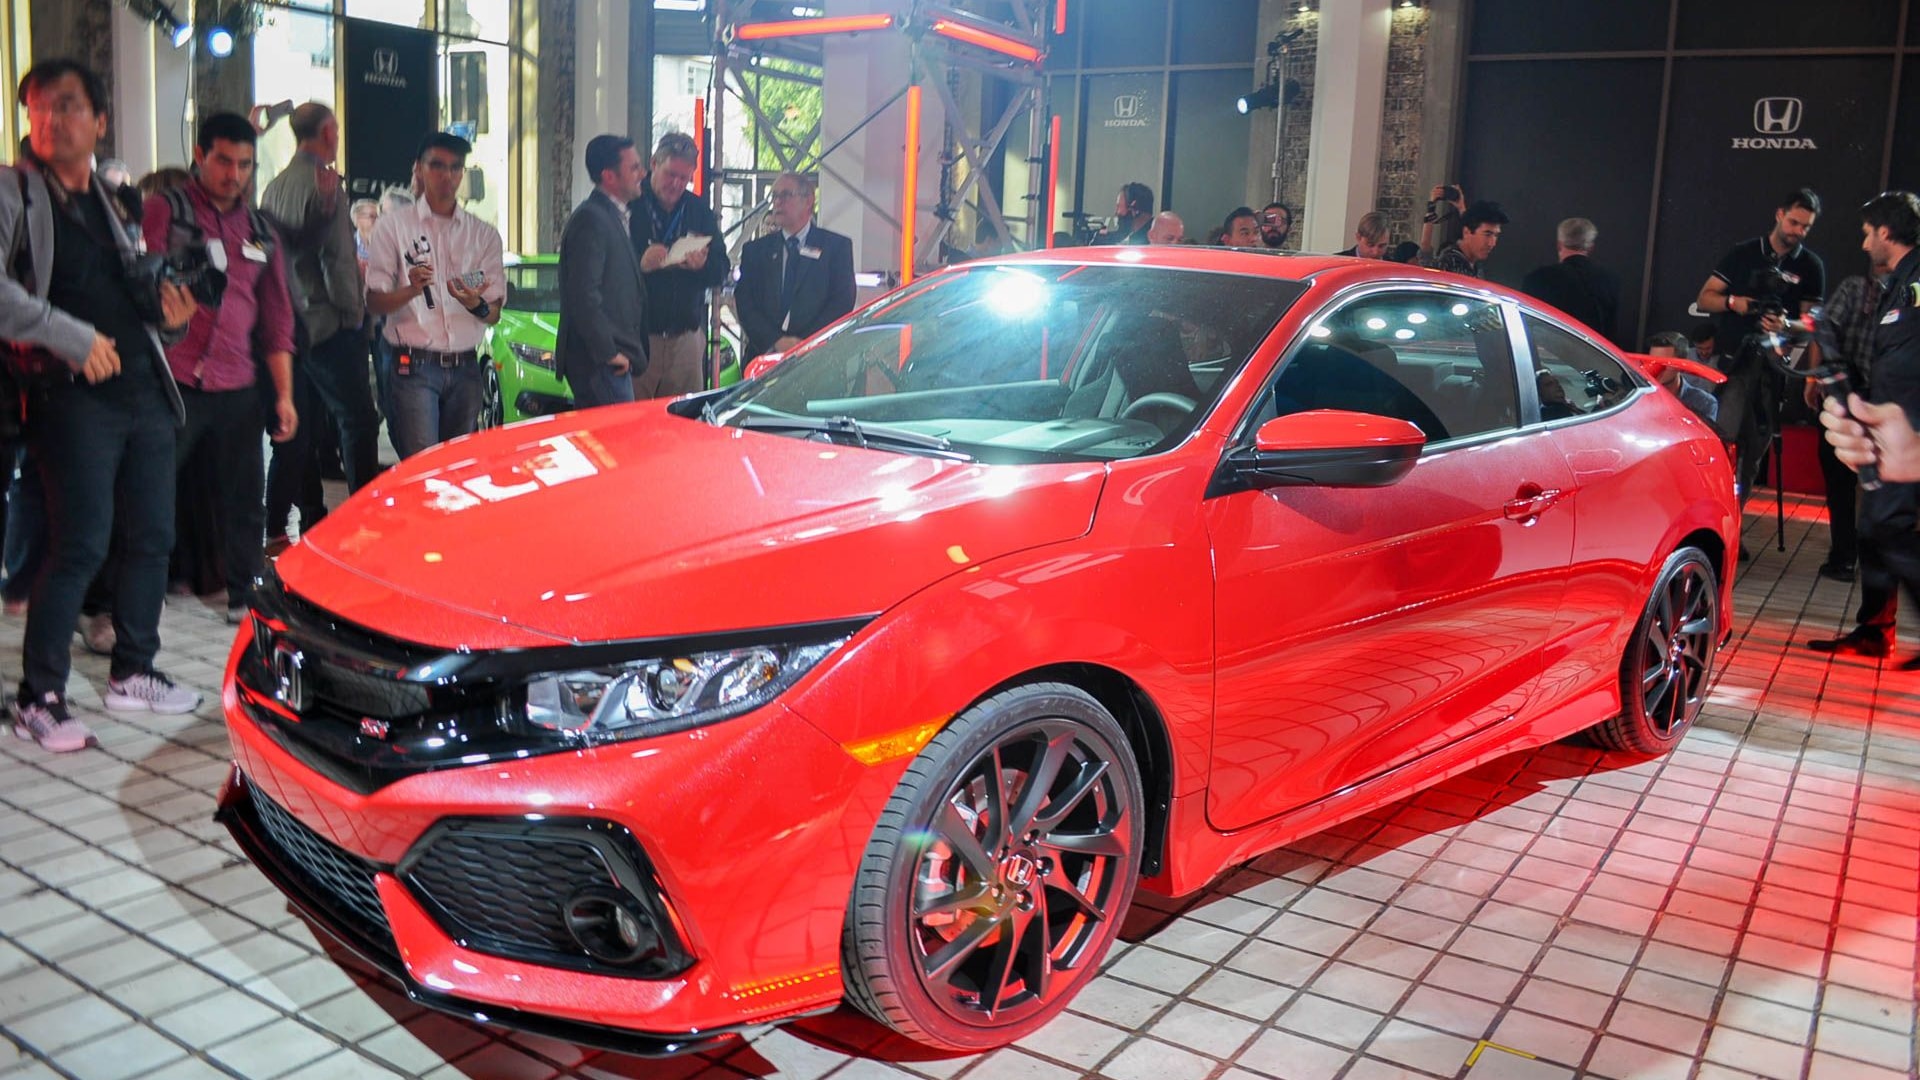 2017 Honda Civic Si Coupe prototype, 2016 Los Angeles auto show